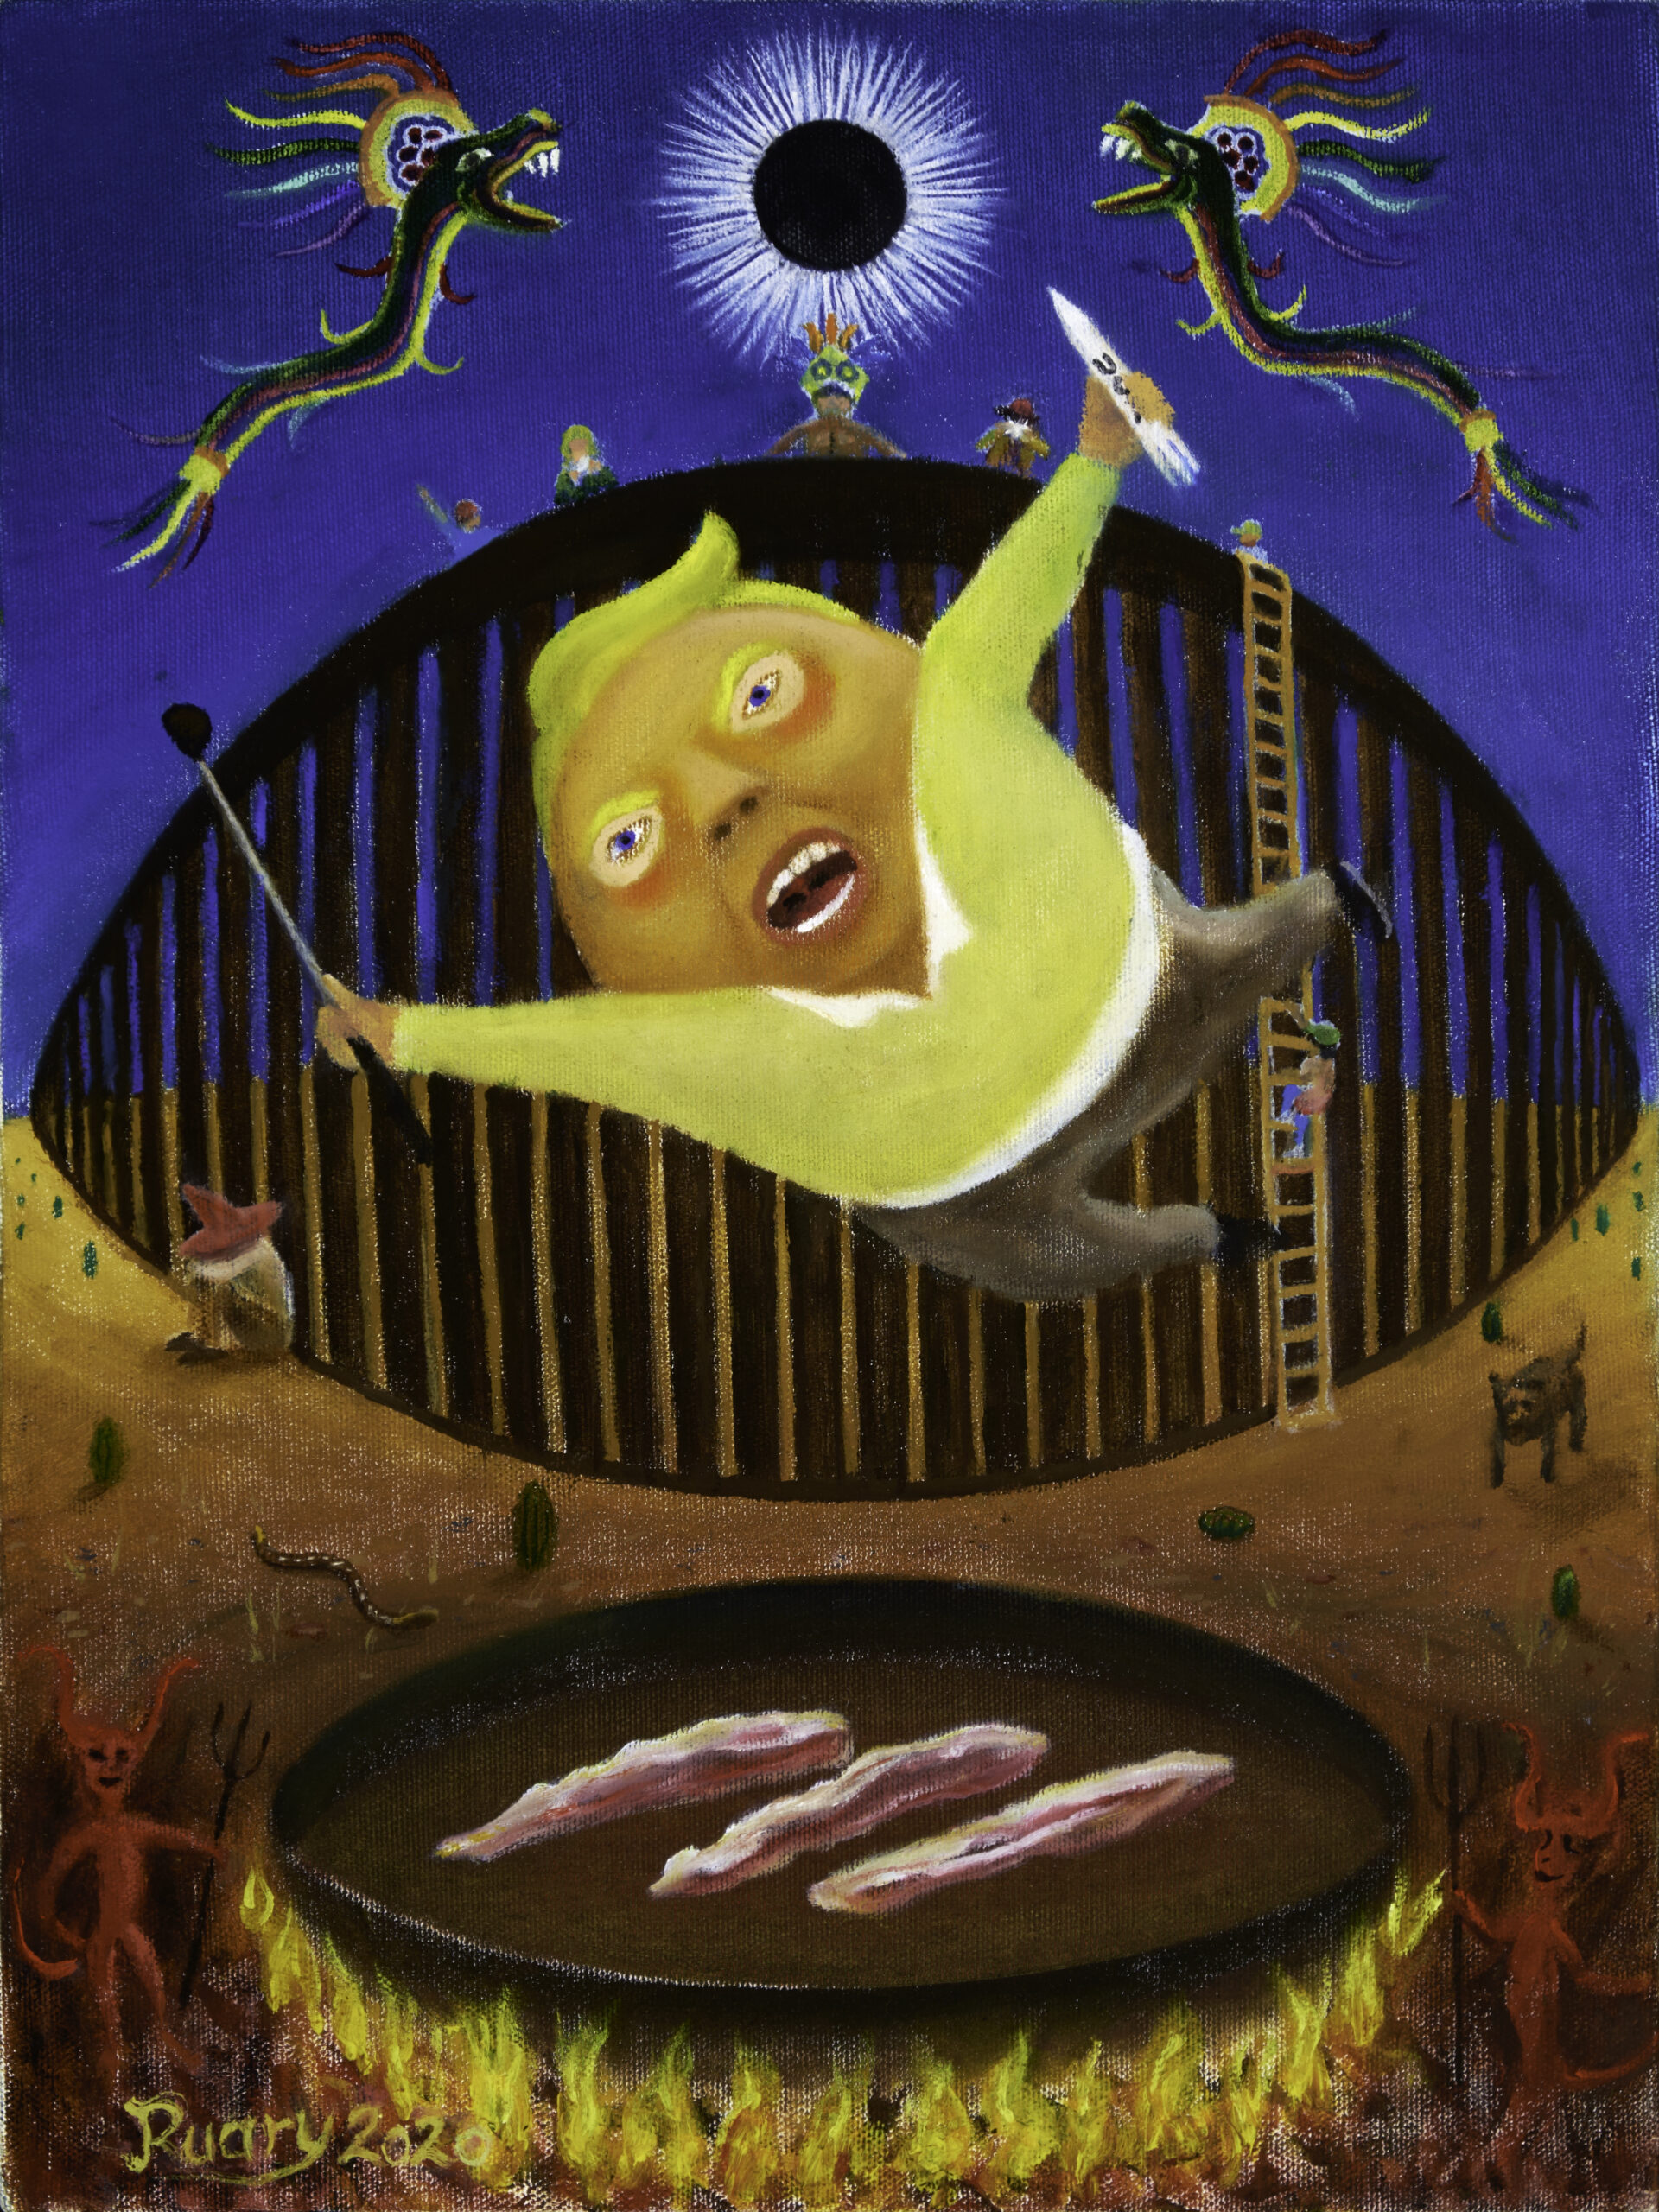 Trumpty Dumpty Had a Great Fall (2020), Oil on canvas, 12 x 16